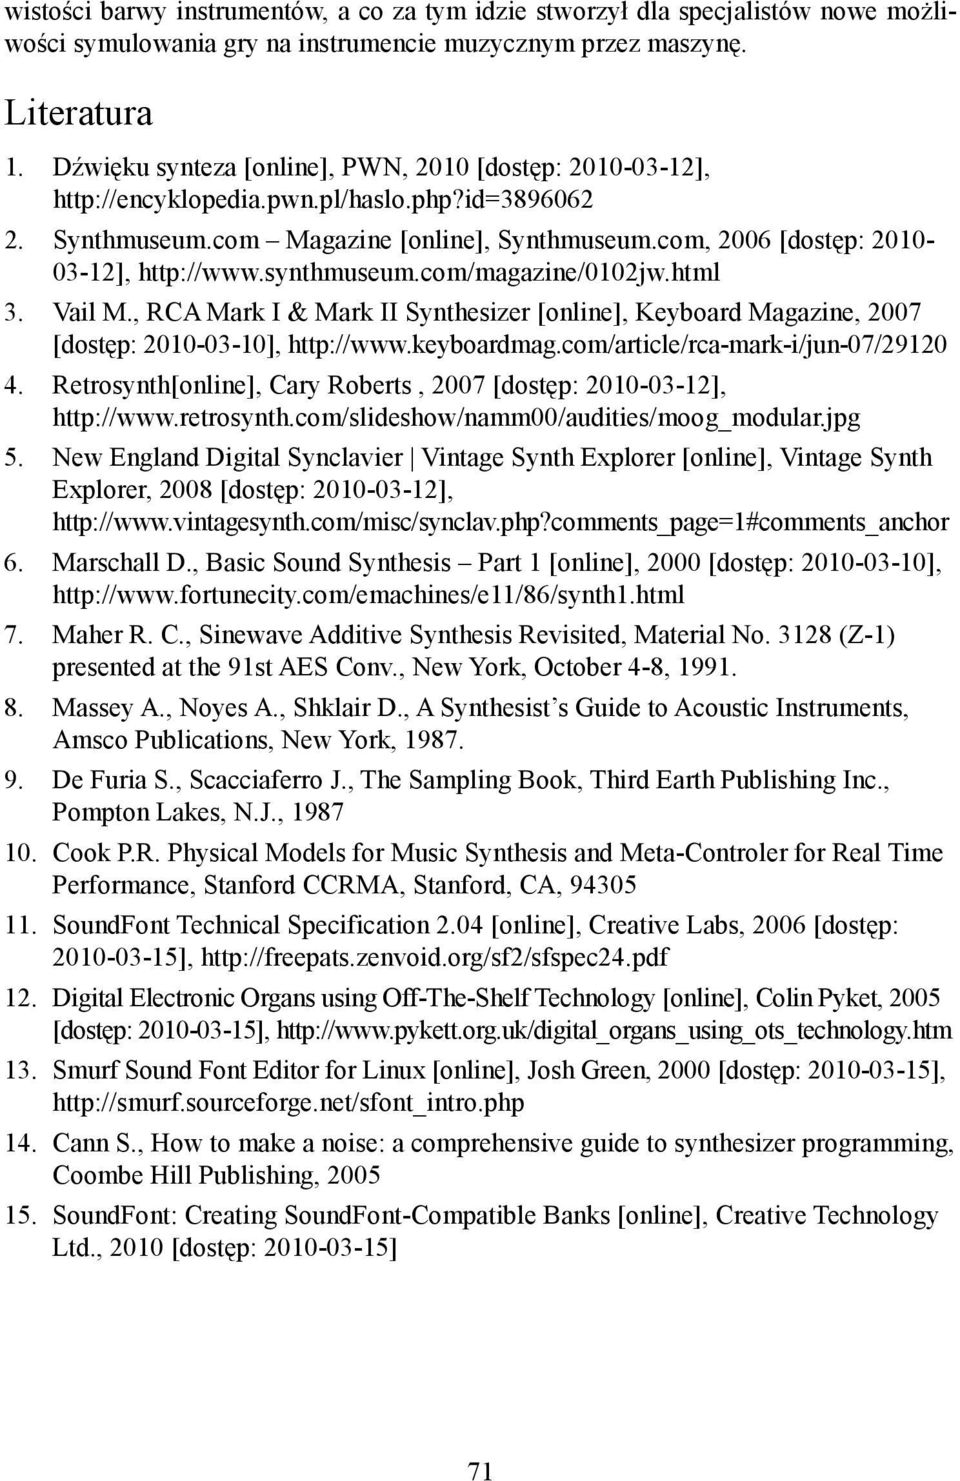 synthmuseum.com/magazine/0102jw.html 3. Vail M., RCA Mark I & Mark II Synthesizer [online], Keyboard Magazine, 2007 [dostęp: 2010-03-10], http://www.keyboardmag.com/article/rca-mark-i/jun-07/29120 4.